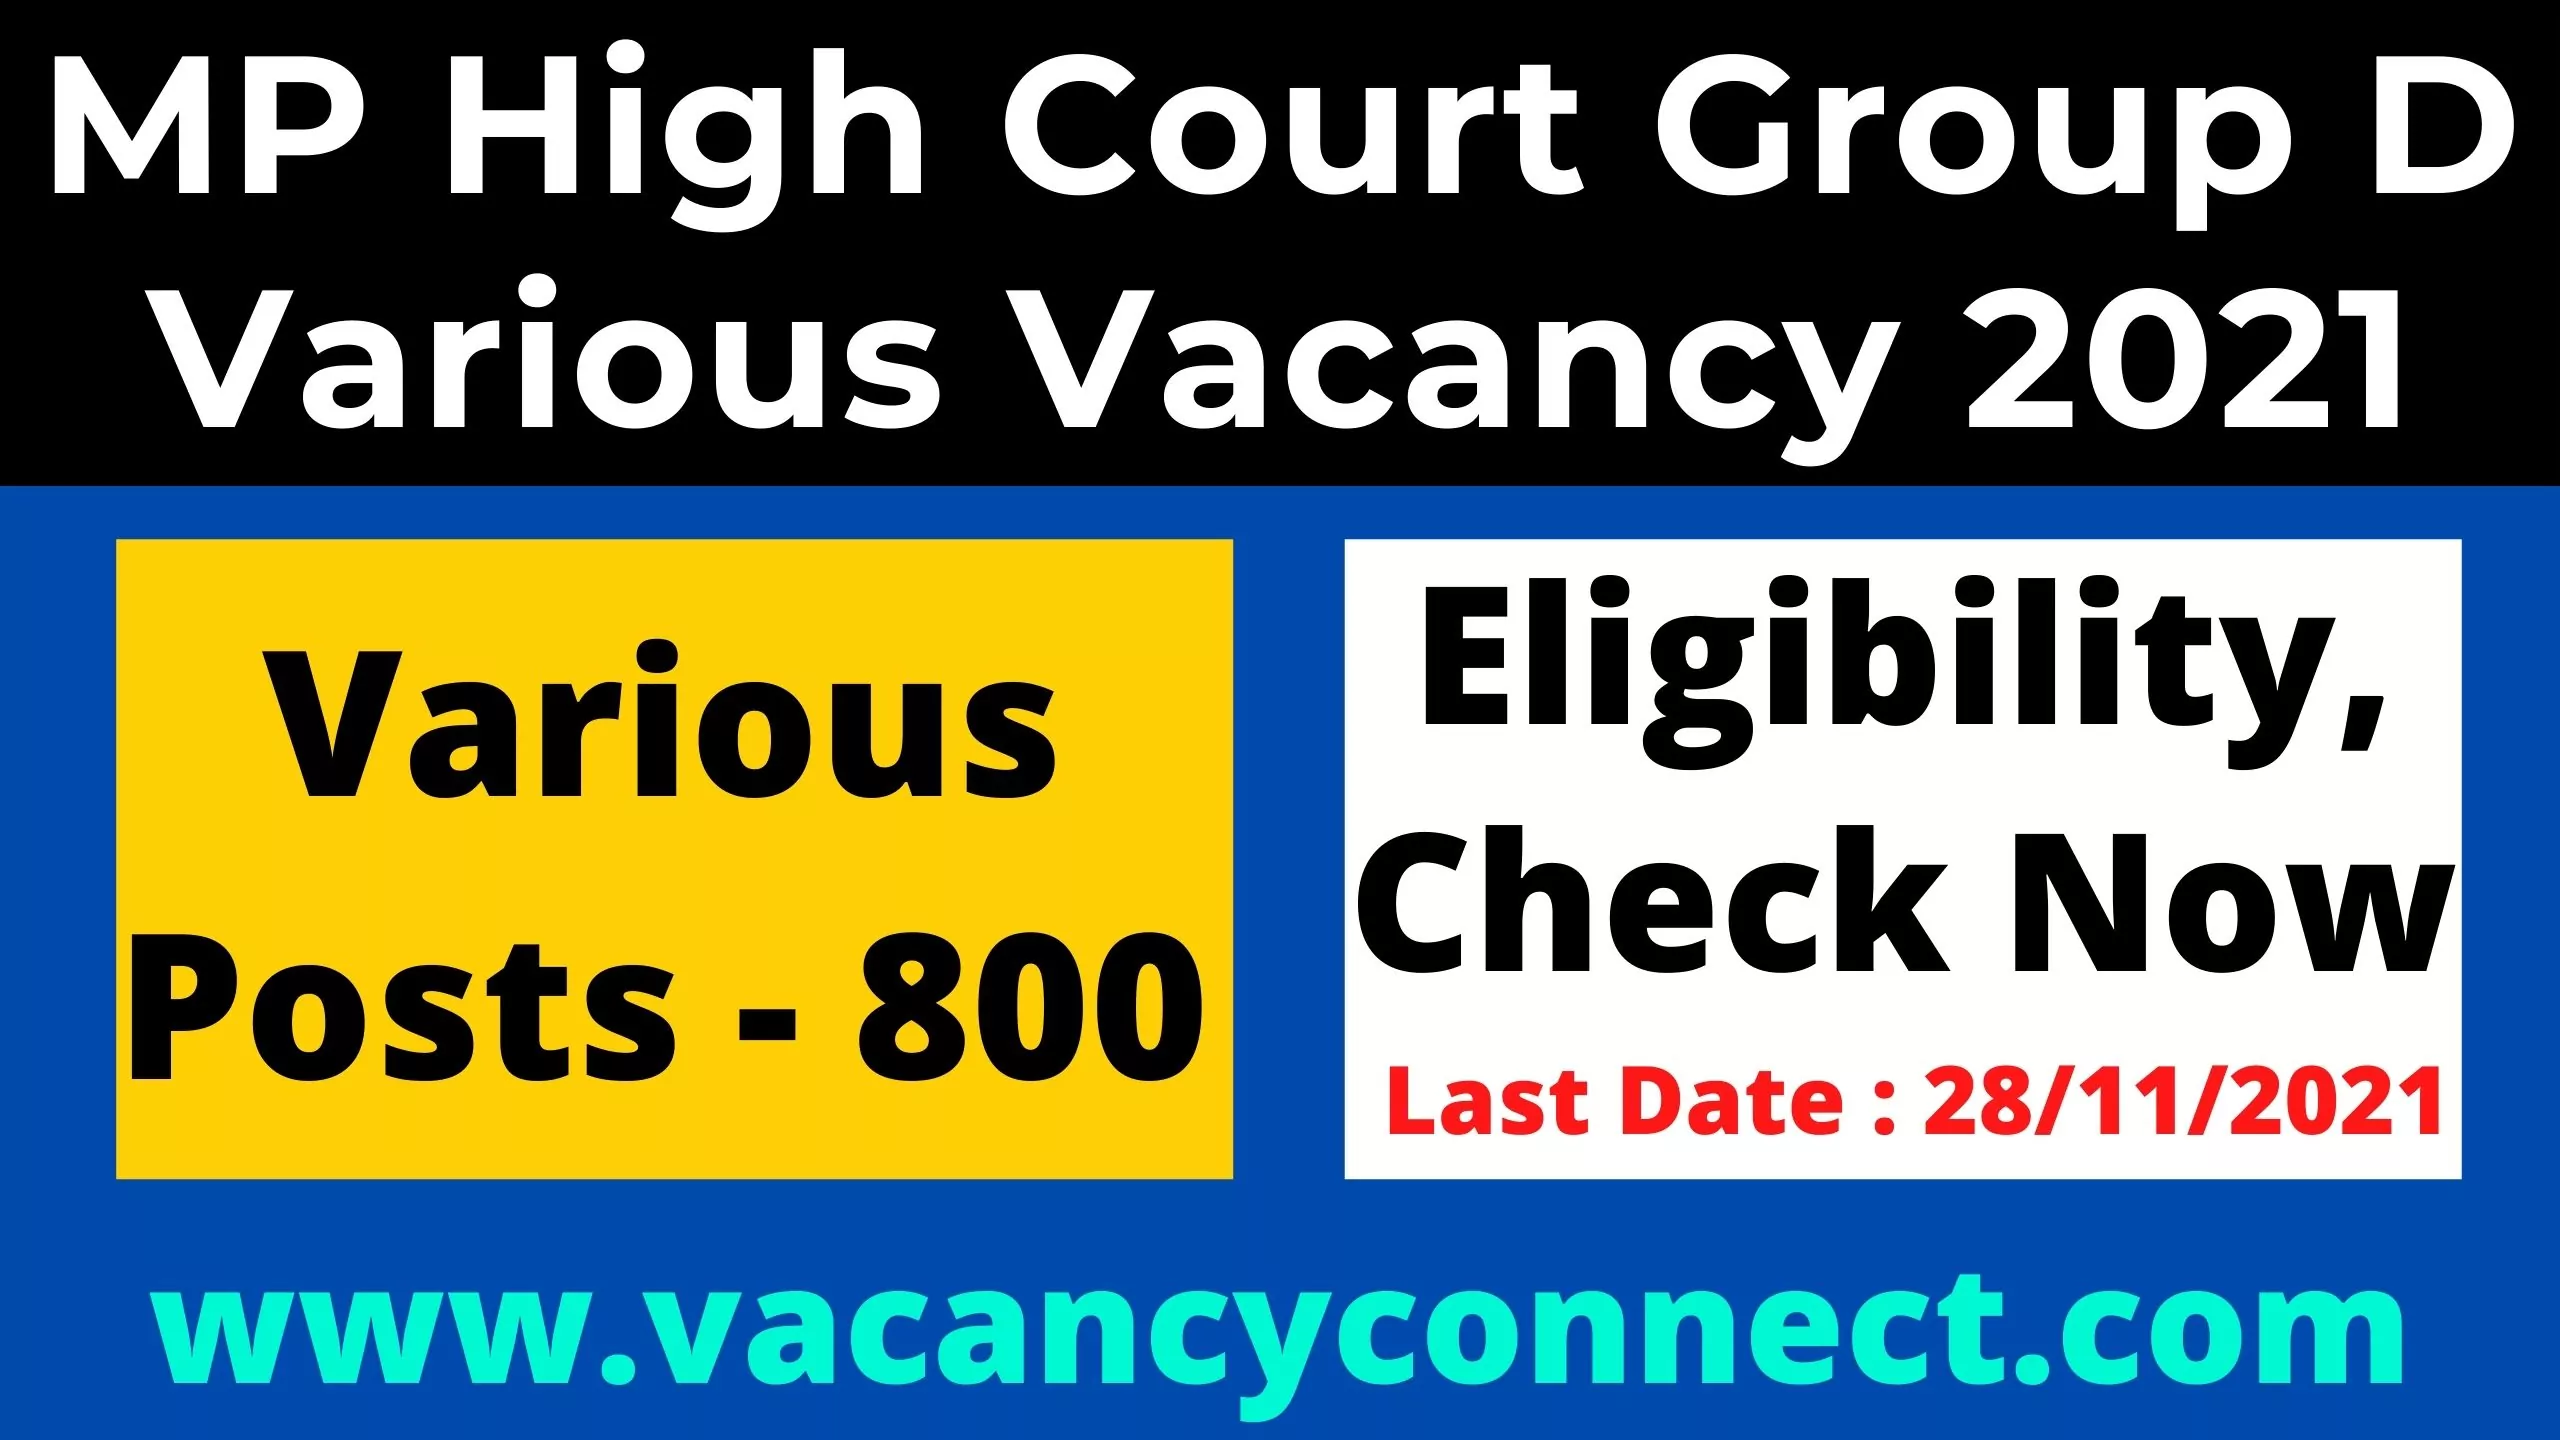 MP High Court Group D Various Vacancy 2021